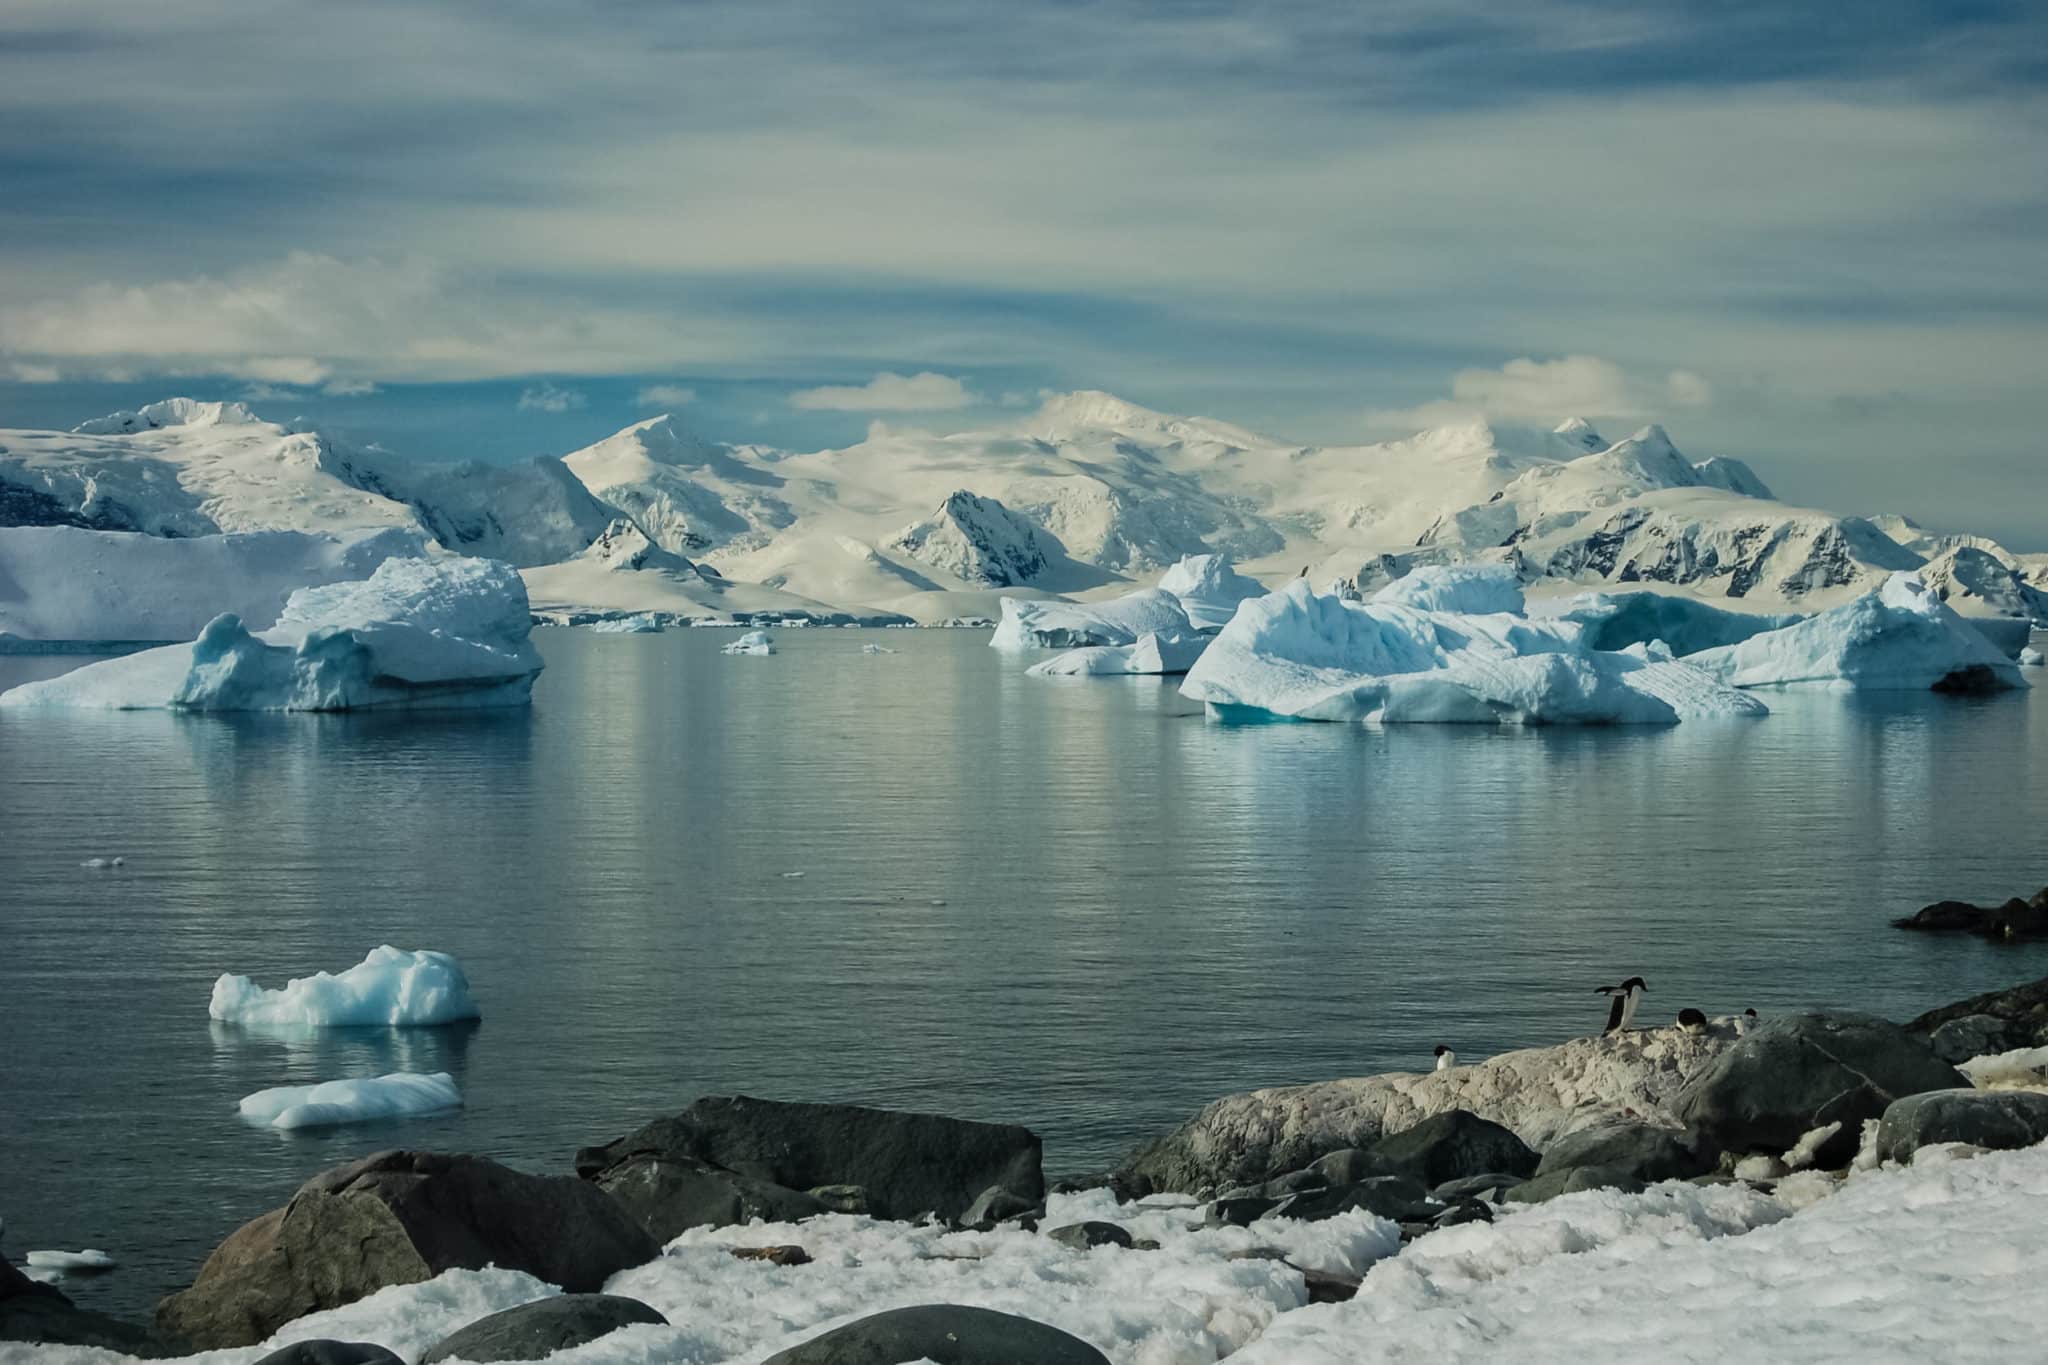 The landscape of the coast of Antarctica